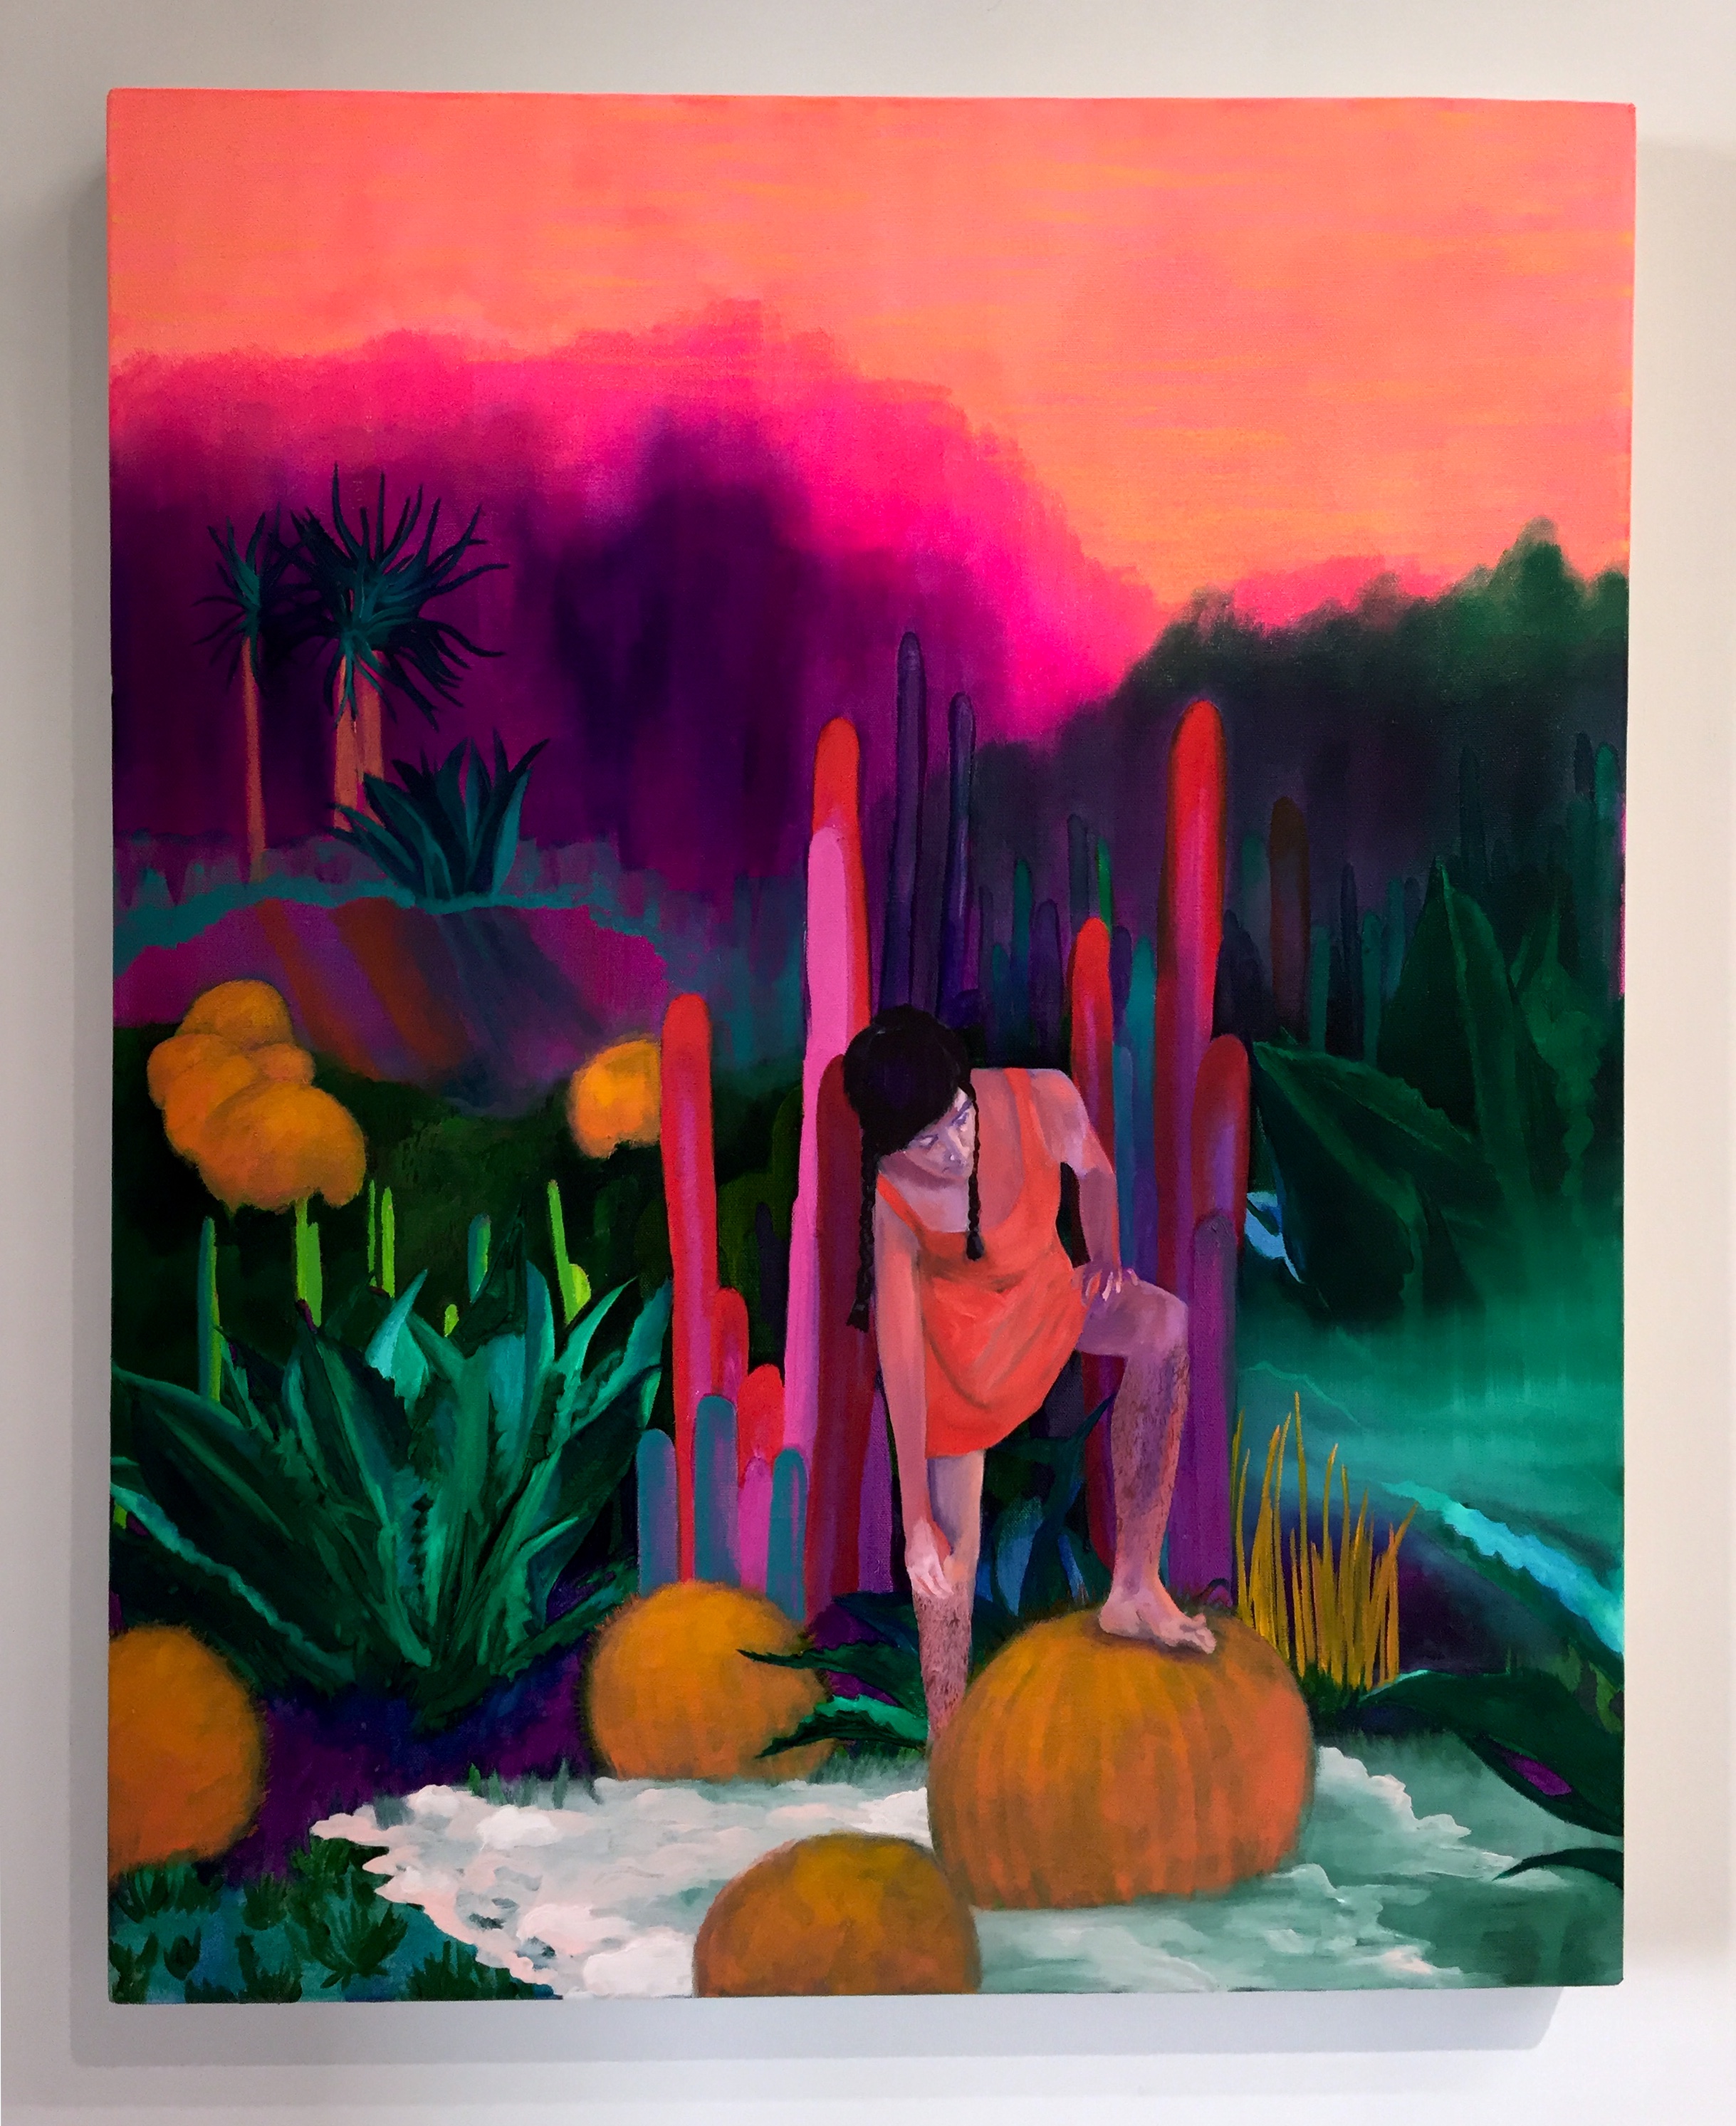   Cream , 2018, oil on canvas, 40 x30” 